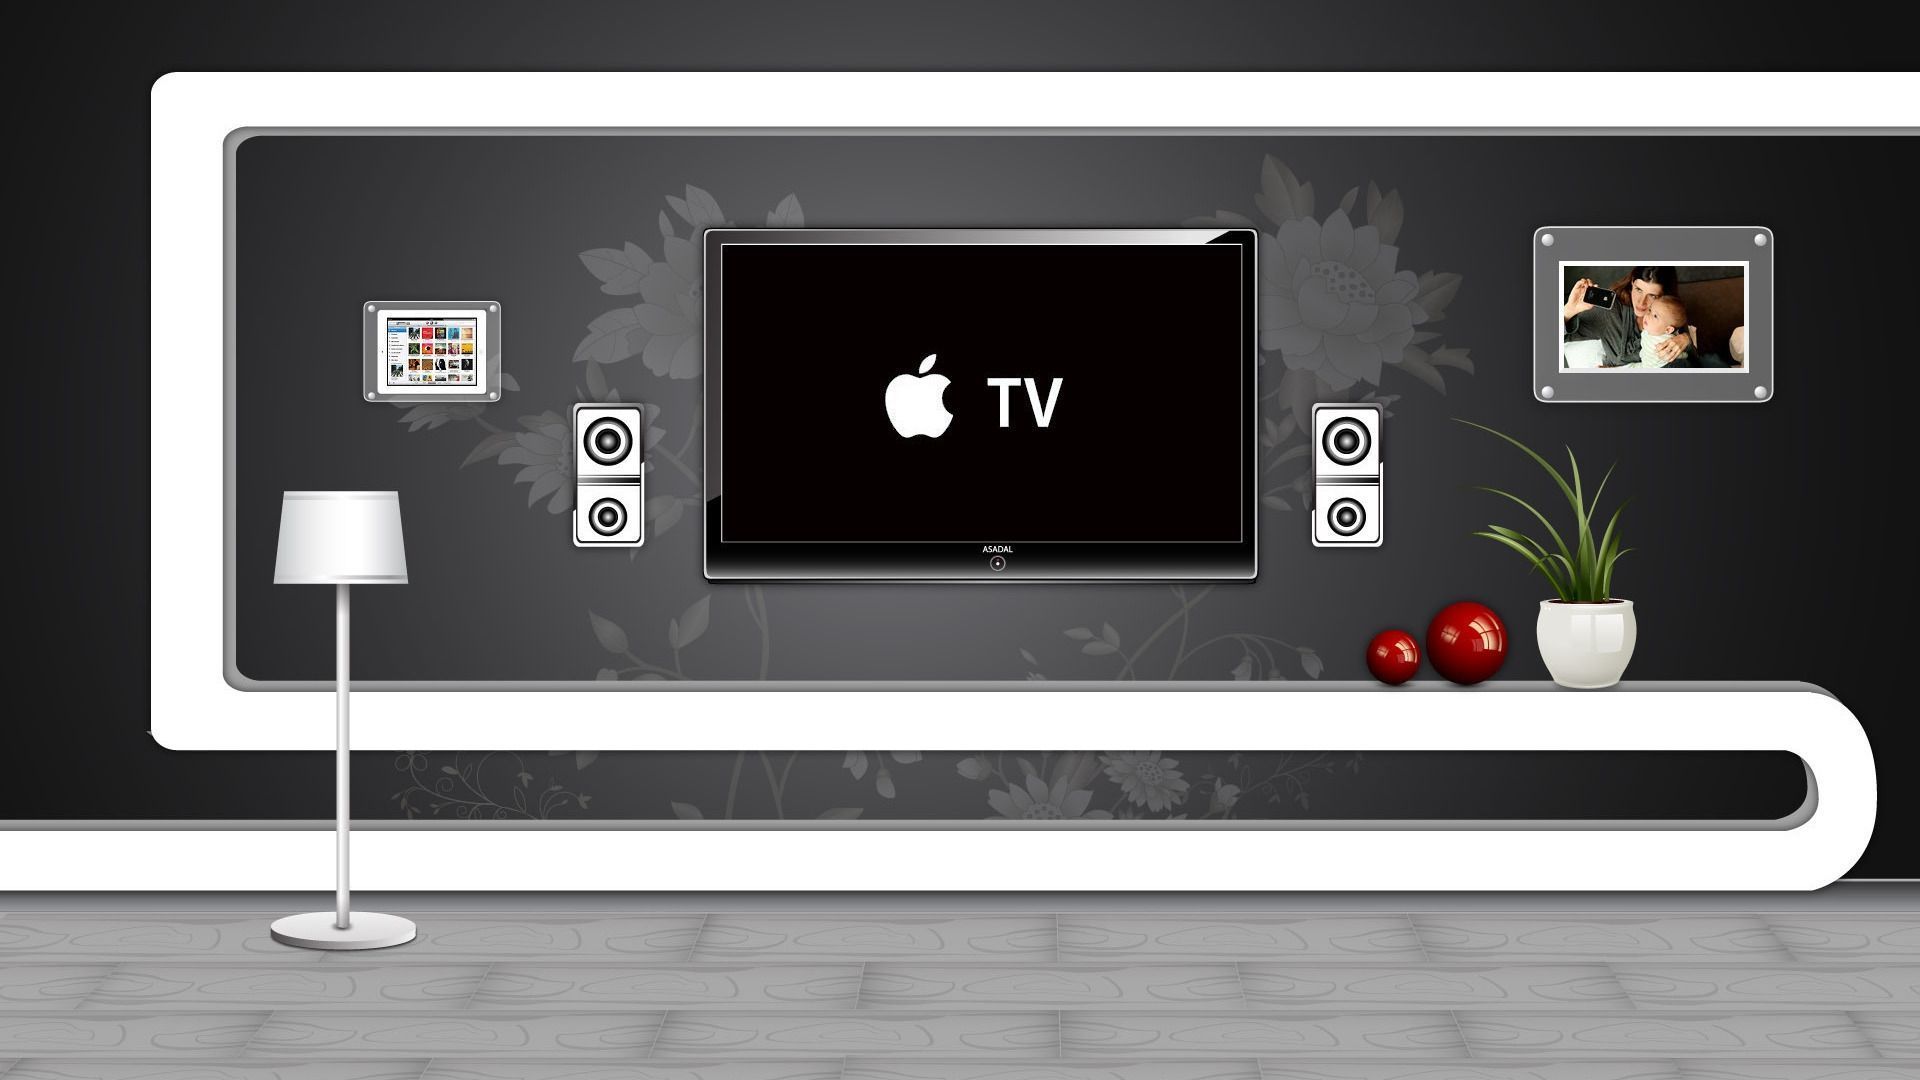 Apple TV Picture Wallpaper For Desktop - Popomypics.com